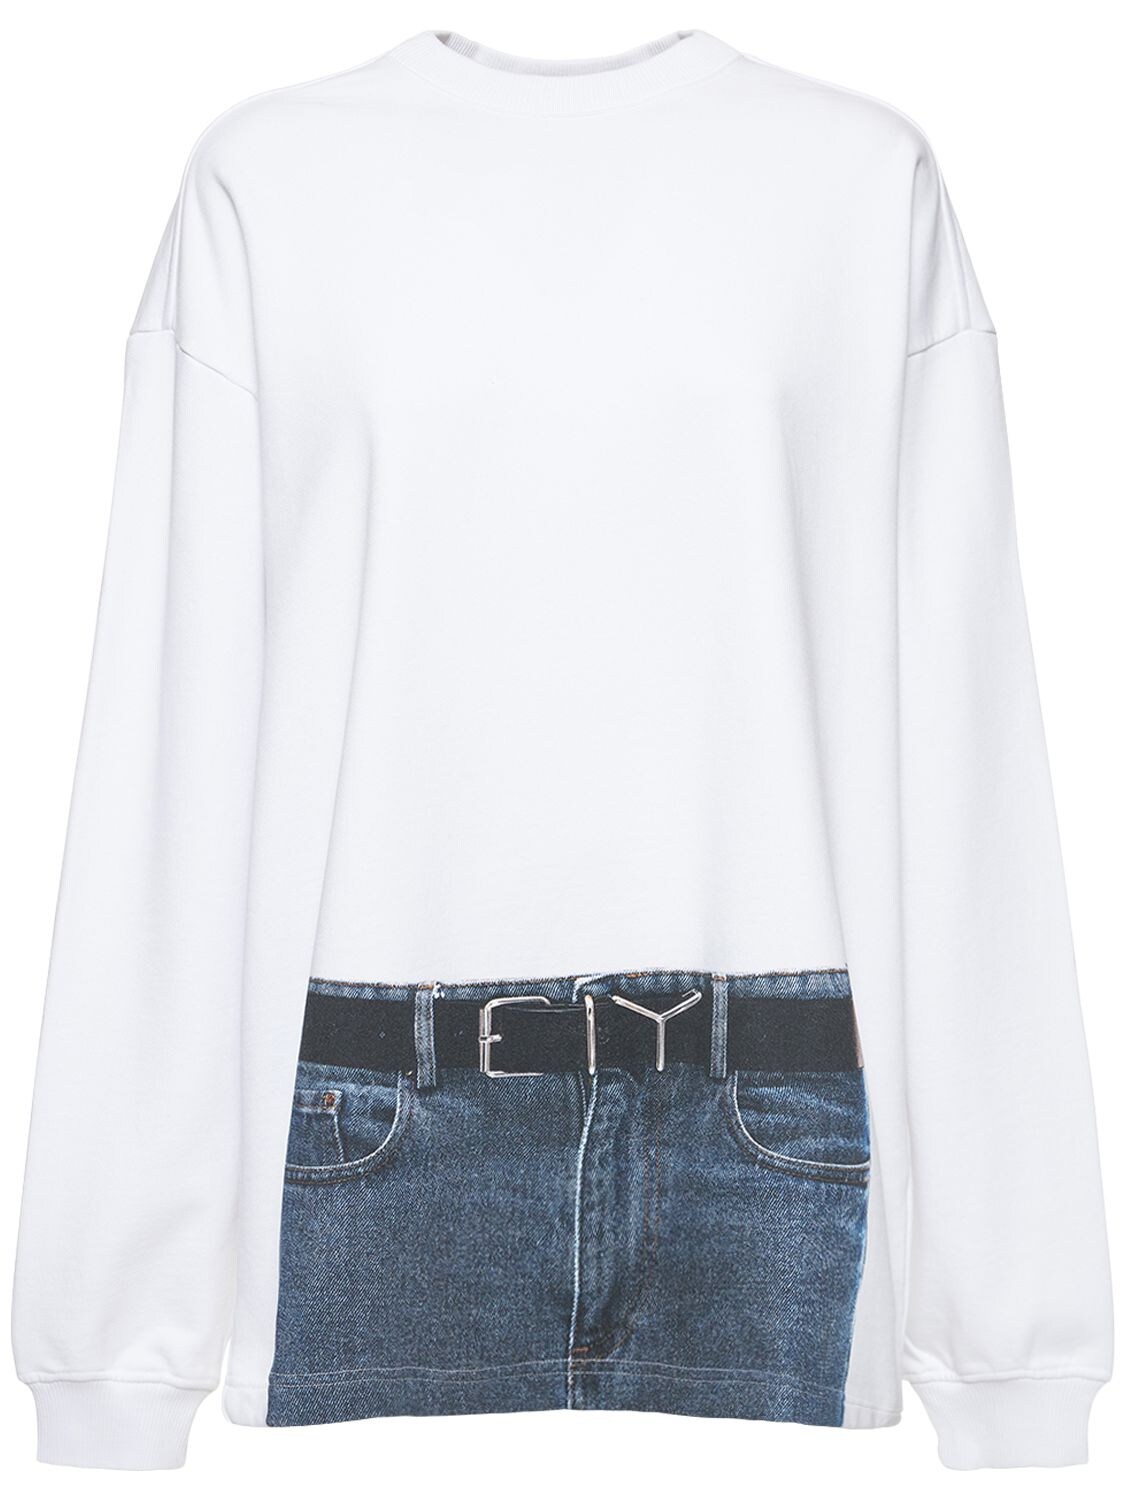 Jpg Trompe L’oeil Print Sweatshirt – WOMEN > CLOTHING > SWEATSHIRTS